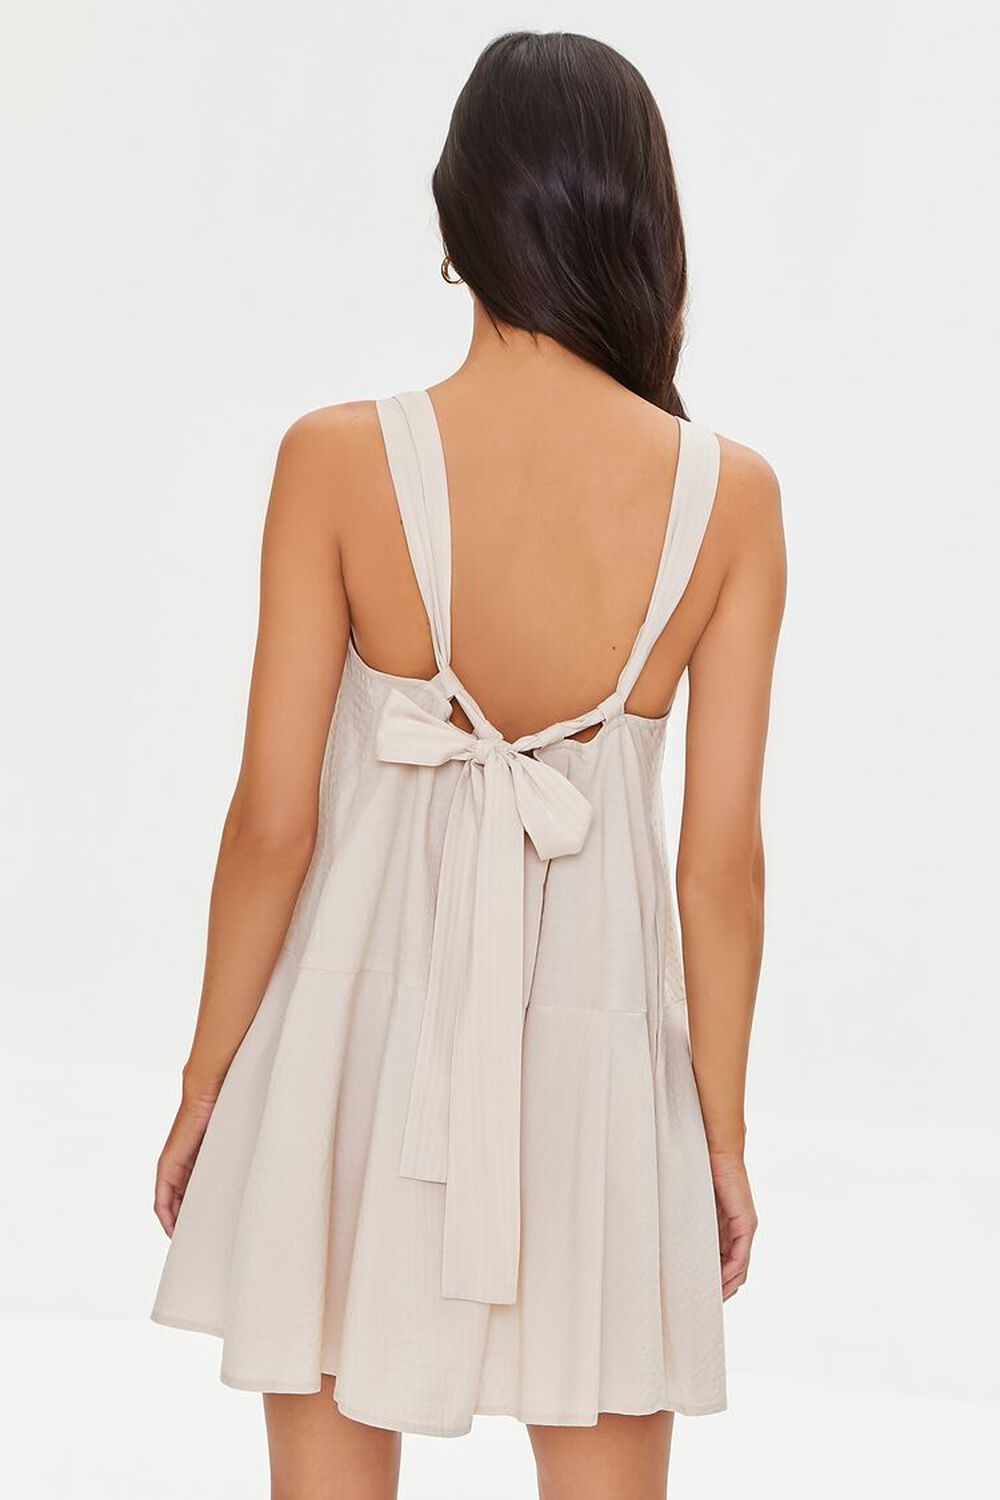 ASH BROWN Tie-Back Mini Dress, image 3